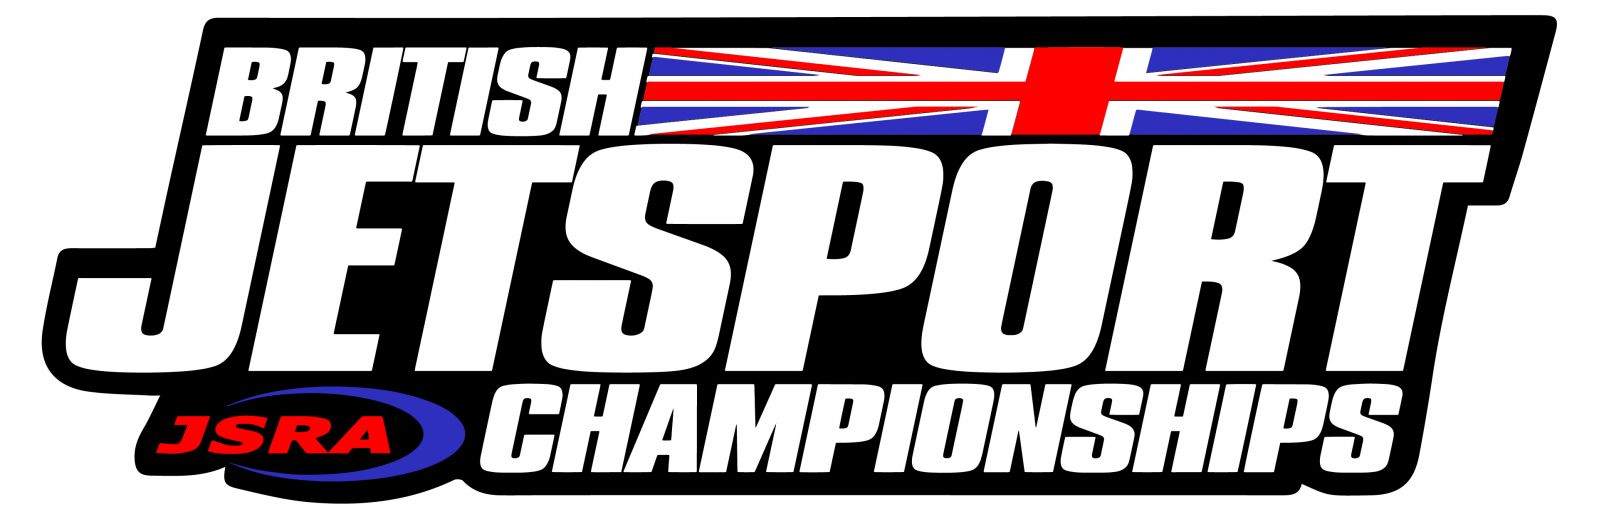 JSRA British Jetsport Championships Rider App